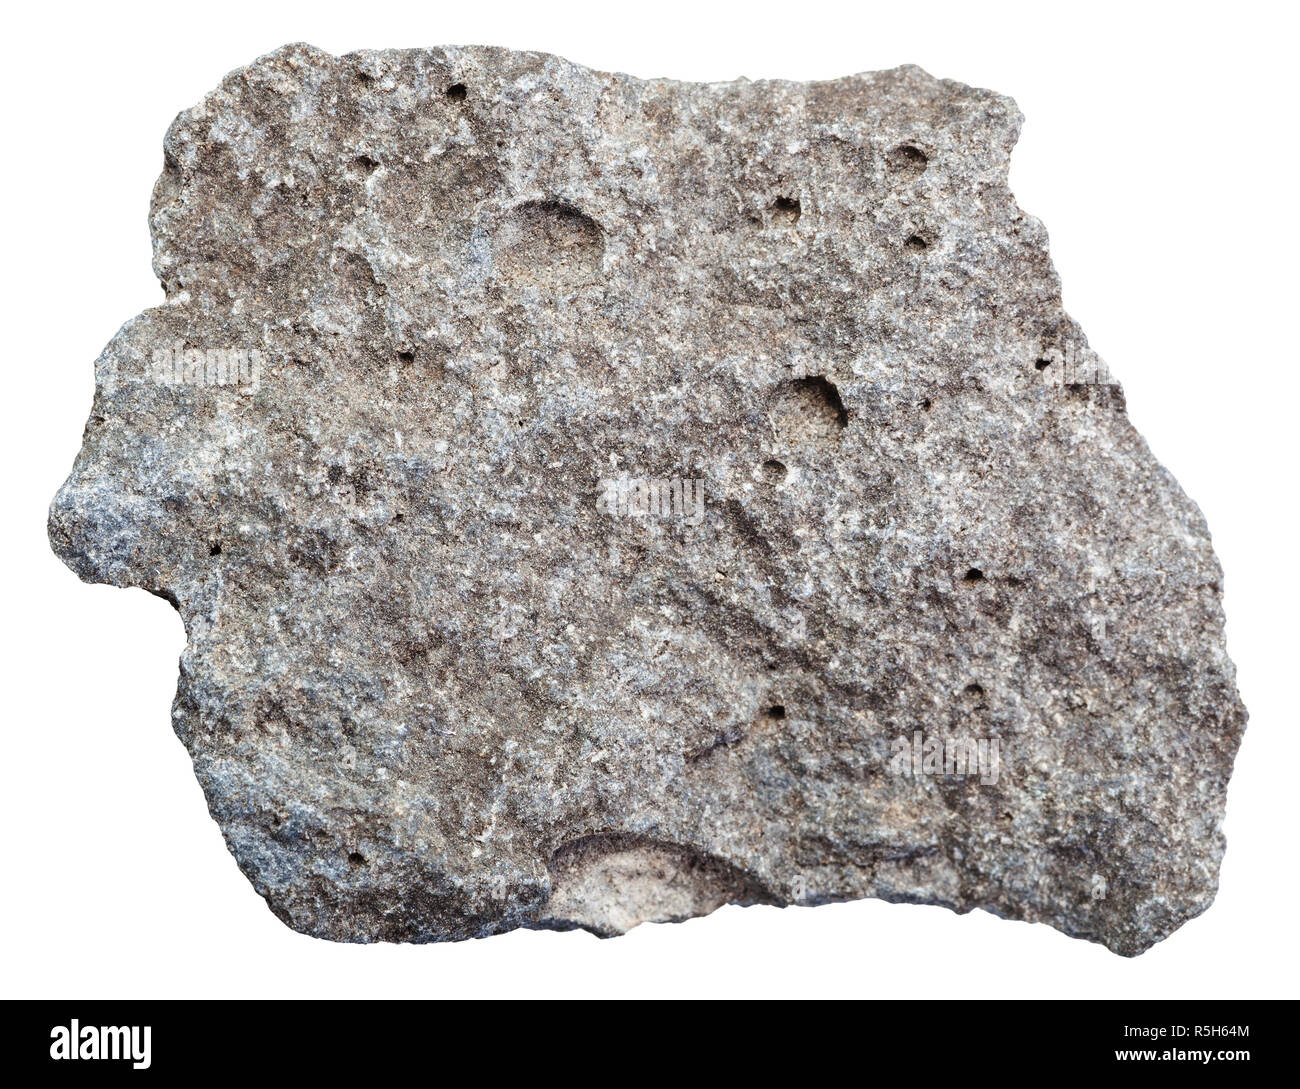 raw porous basalt stone isolated Stock Photo